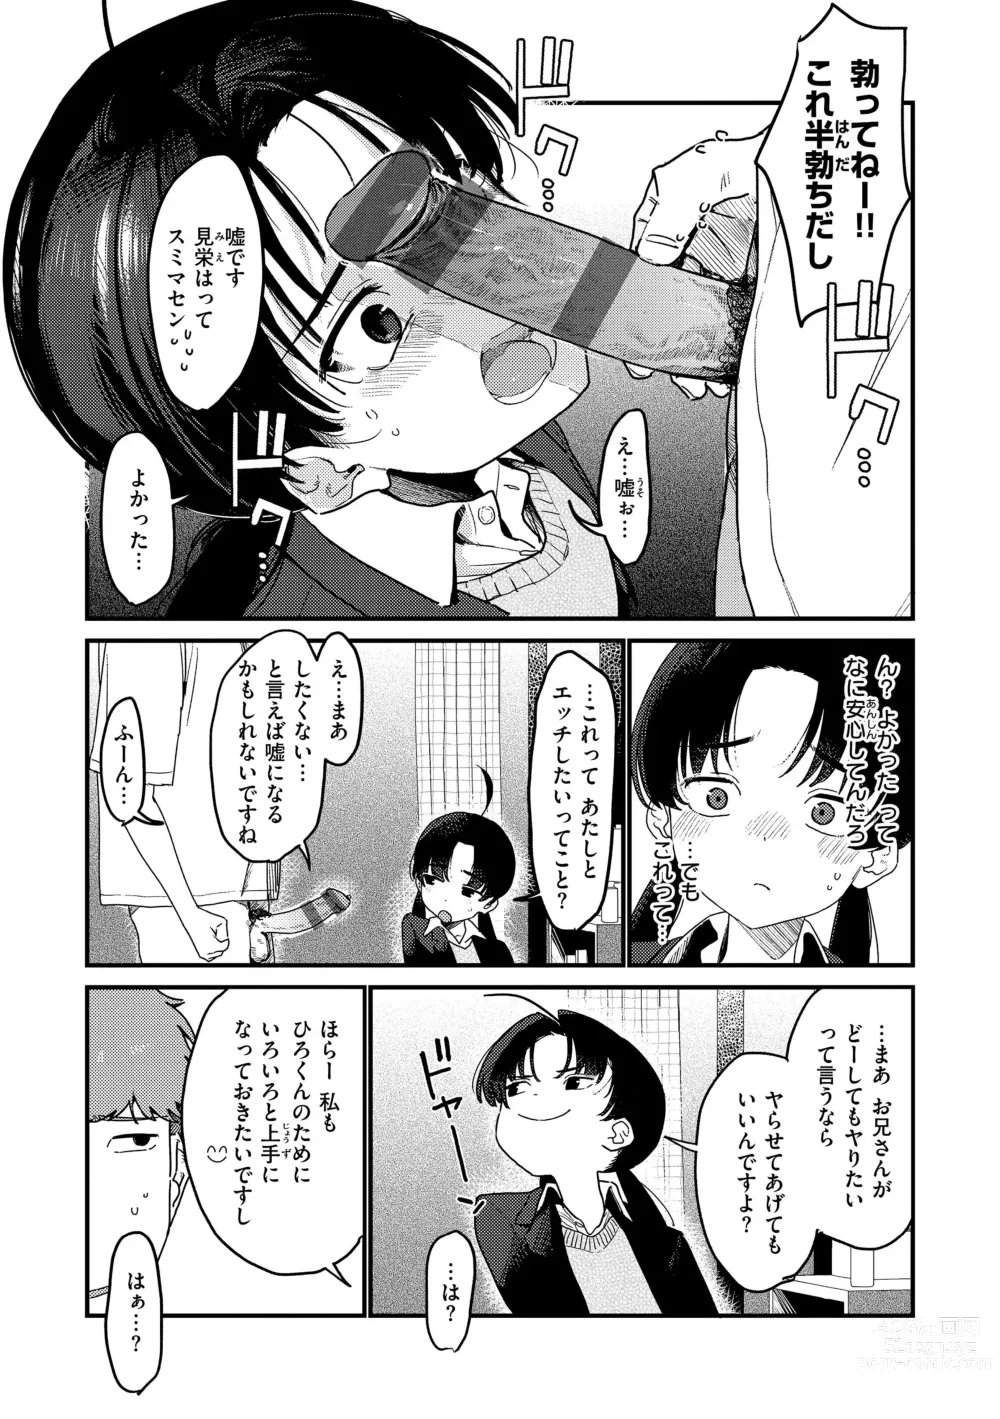 Page 15 of manga Wakarasete. - Show me reality.